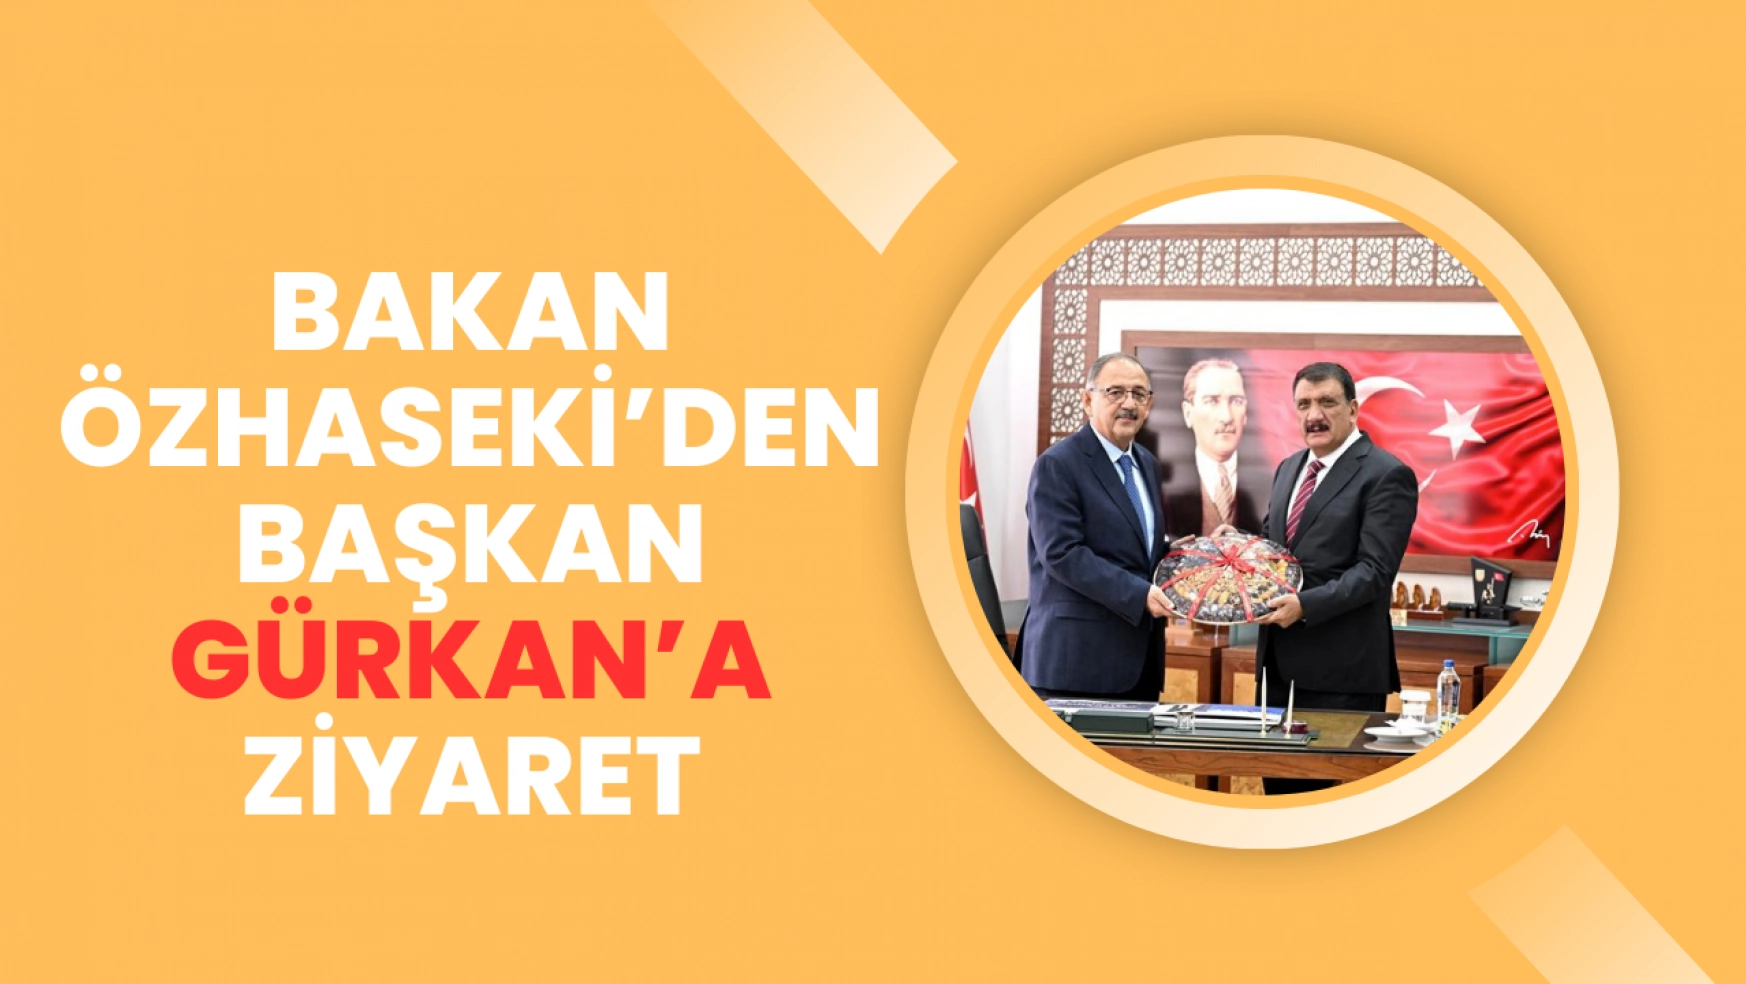 Bakan Özhaseki'den Başkan Gürkan'a Ziyaret